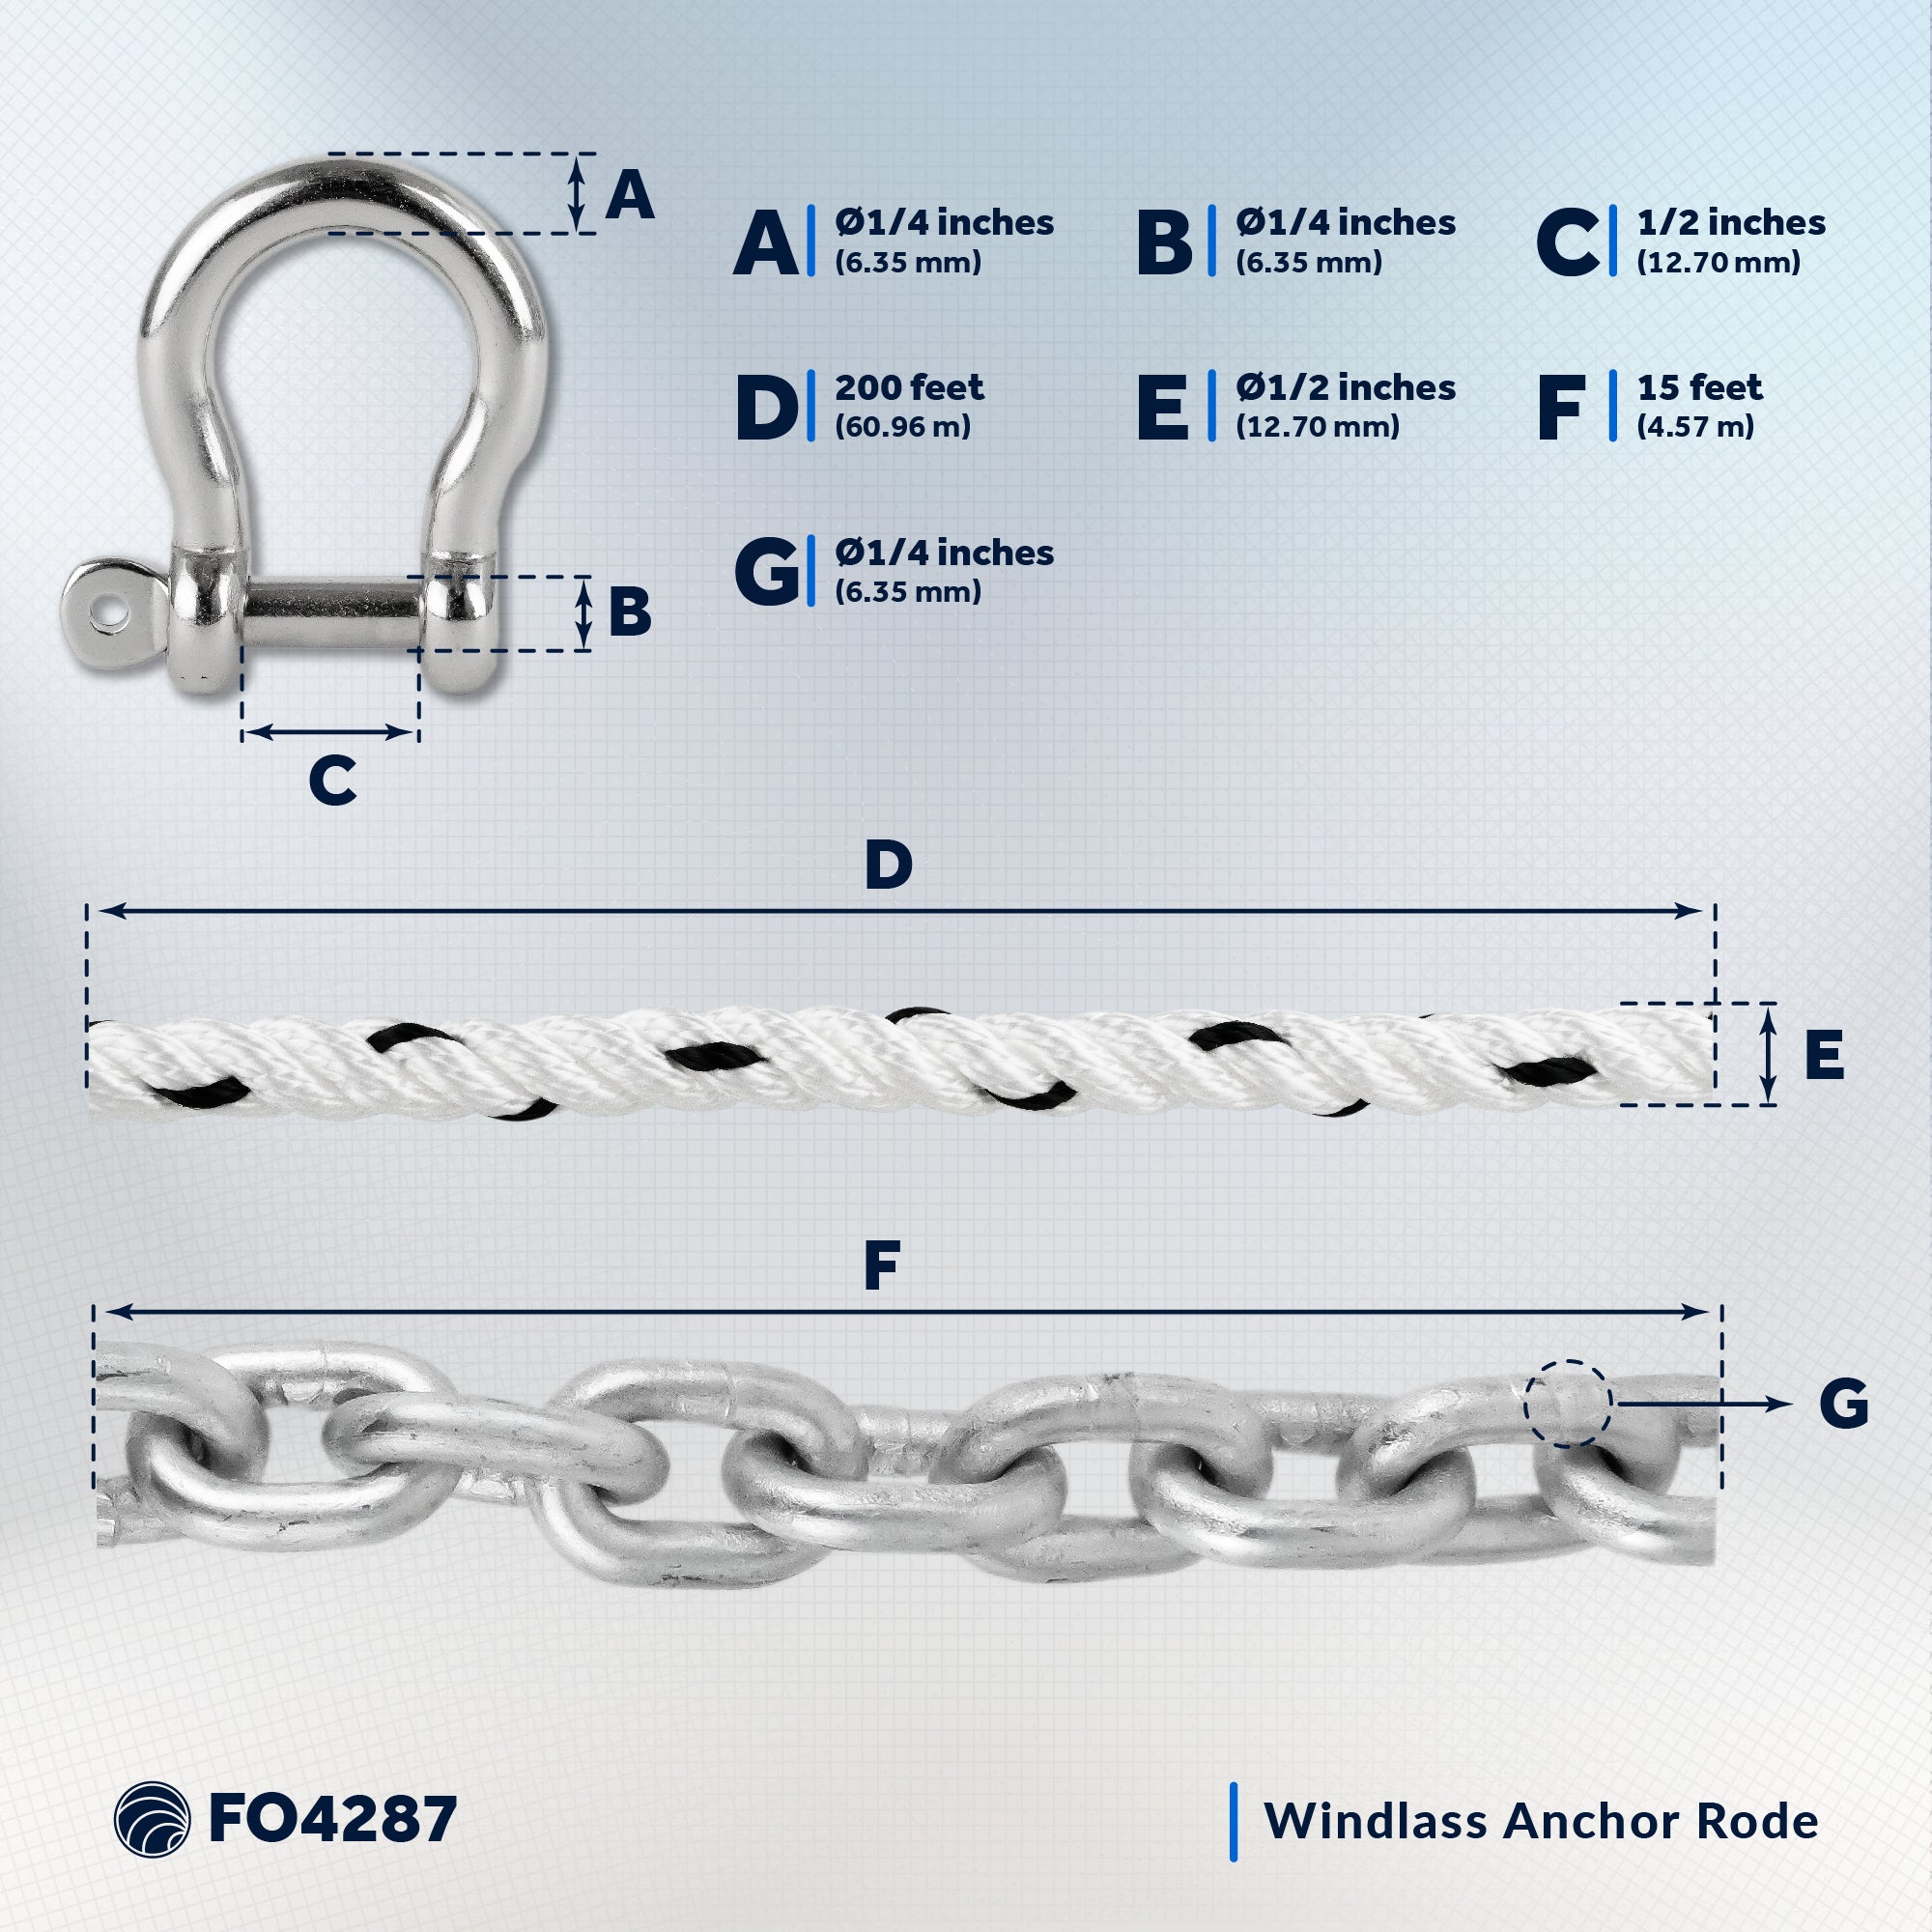 Windlass Anchor Rode, 1/2" x 200' Nylon 3-Strand Rope,  1/4" x 15' G4 Hot-Dipped Galvanized Steel Chain - FO4287